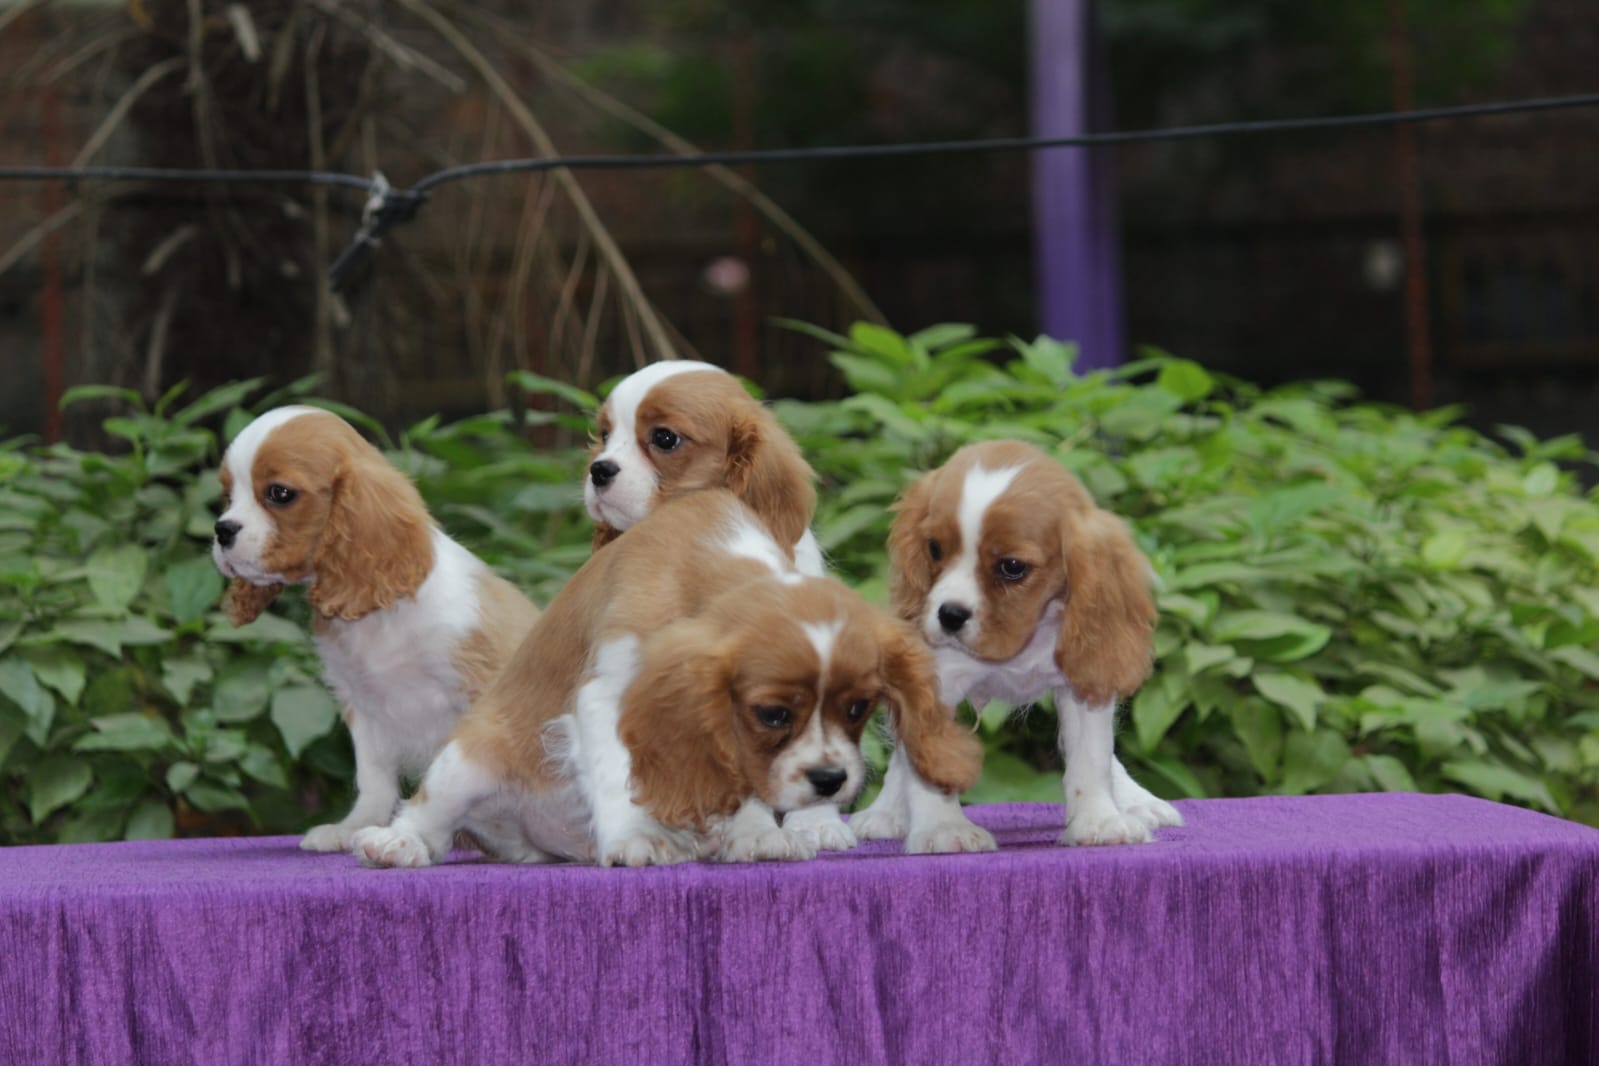 Kings charles Spaniel puppies from Bangalore. Breeder: Santosh